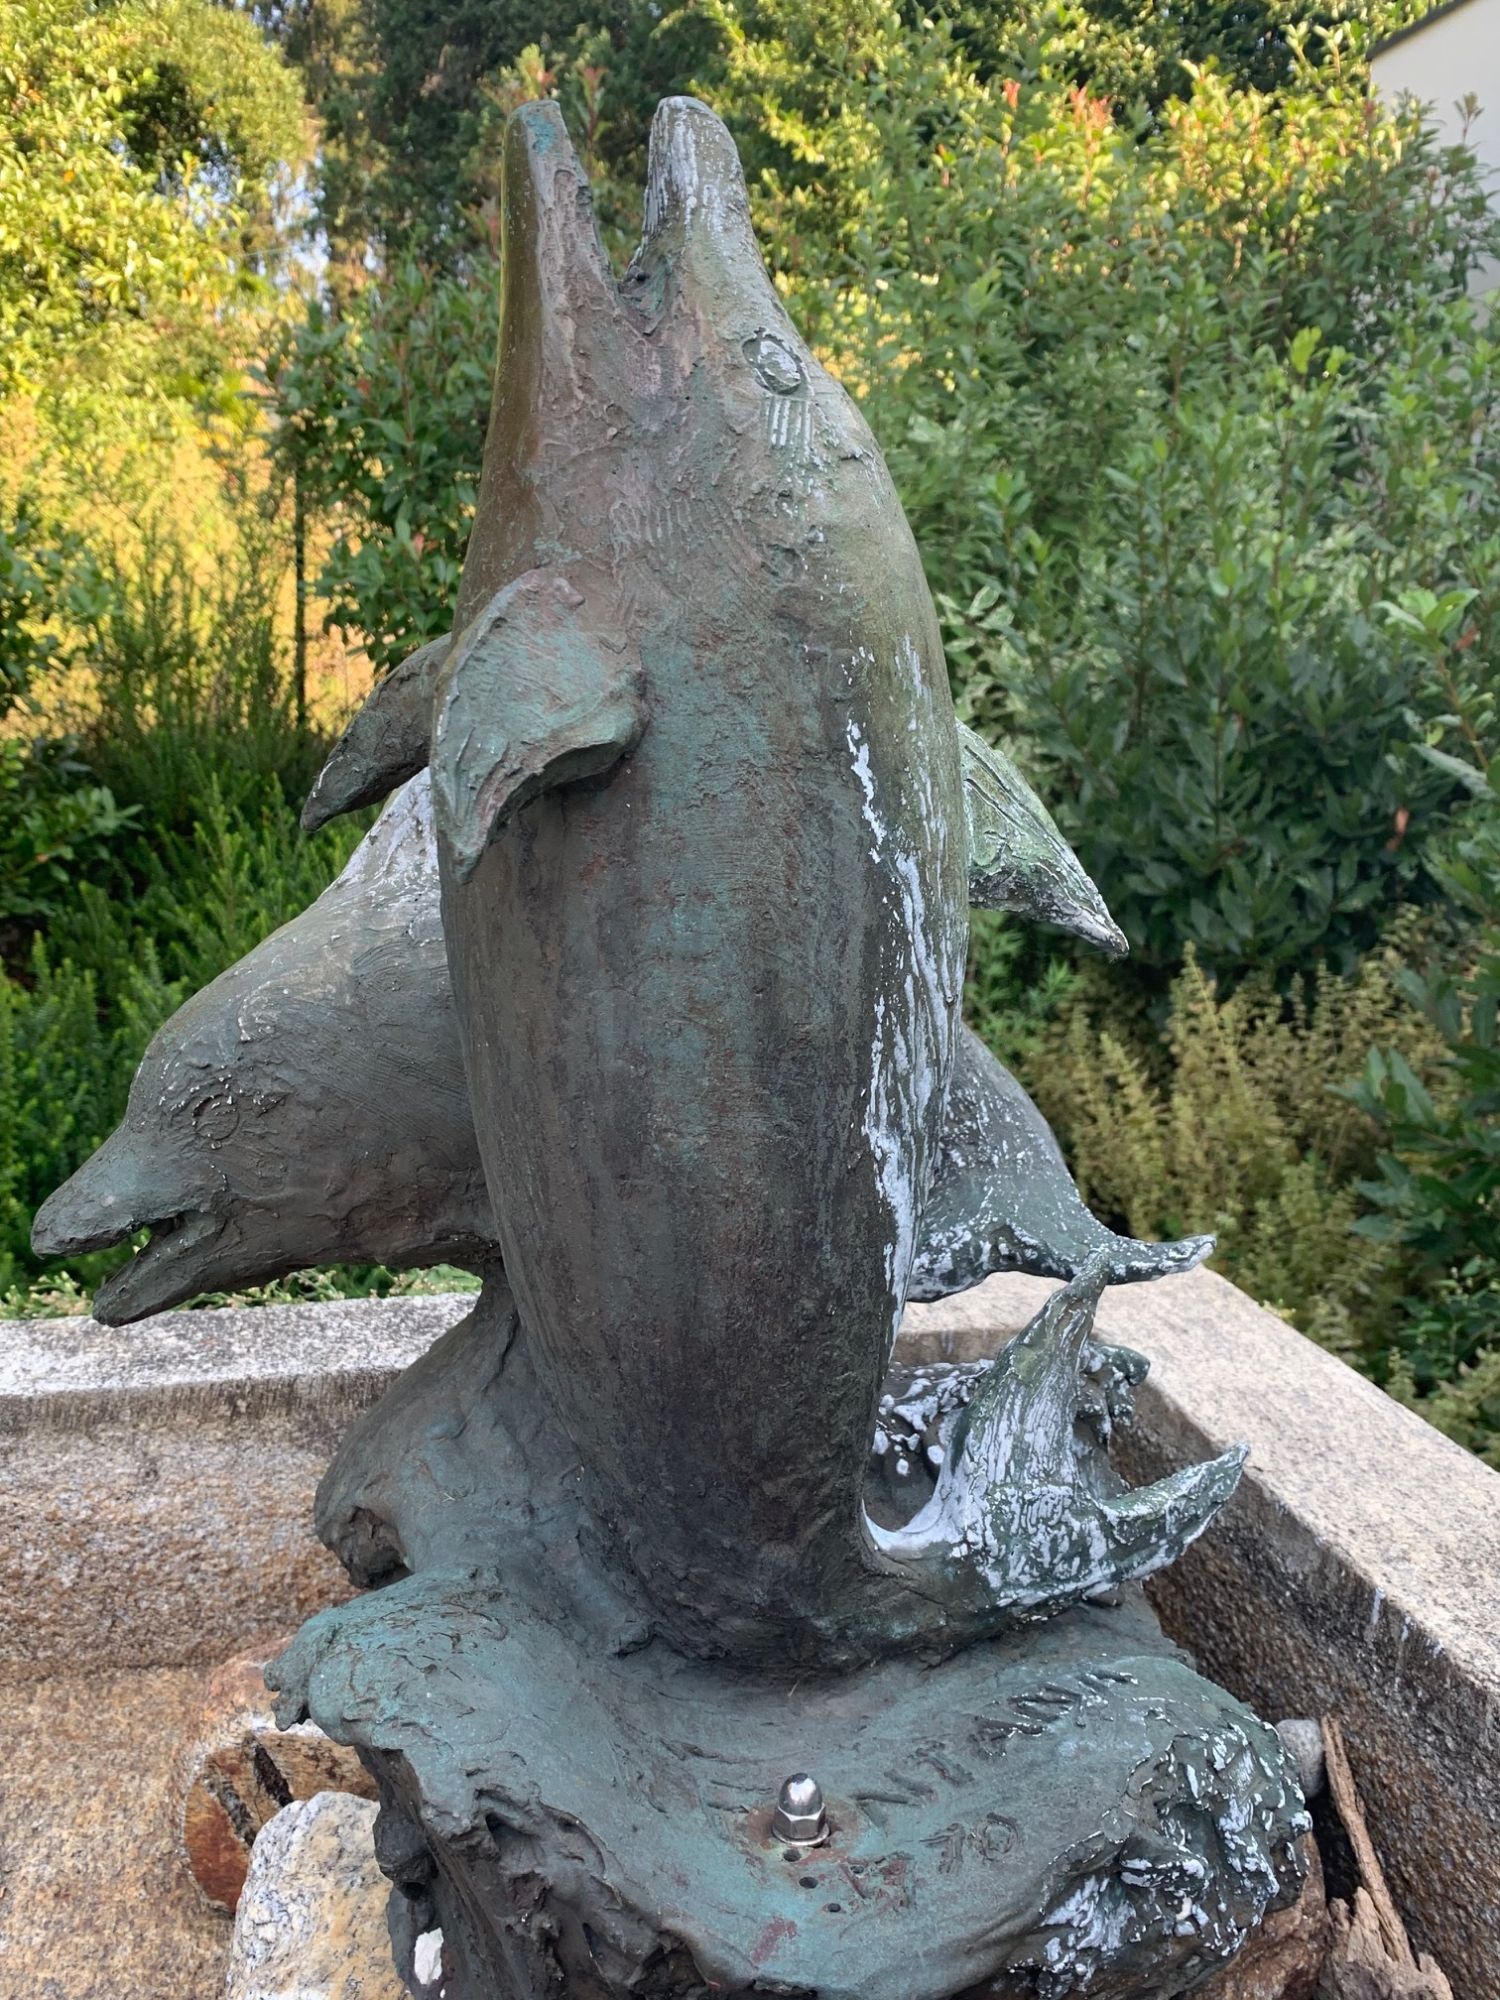 Renzo Fontana, "Delfini", 1970, bronzo, Cadempino